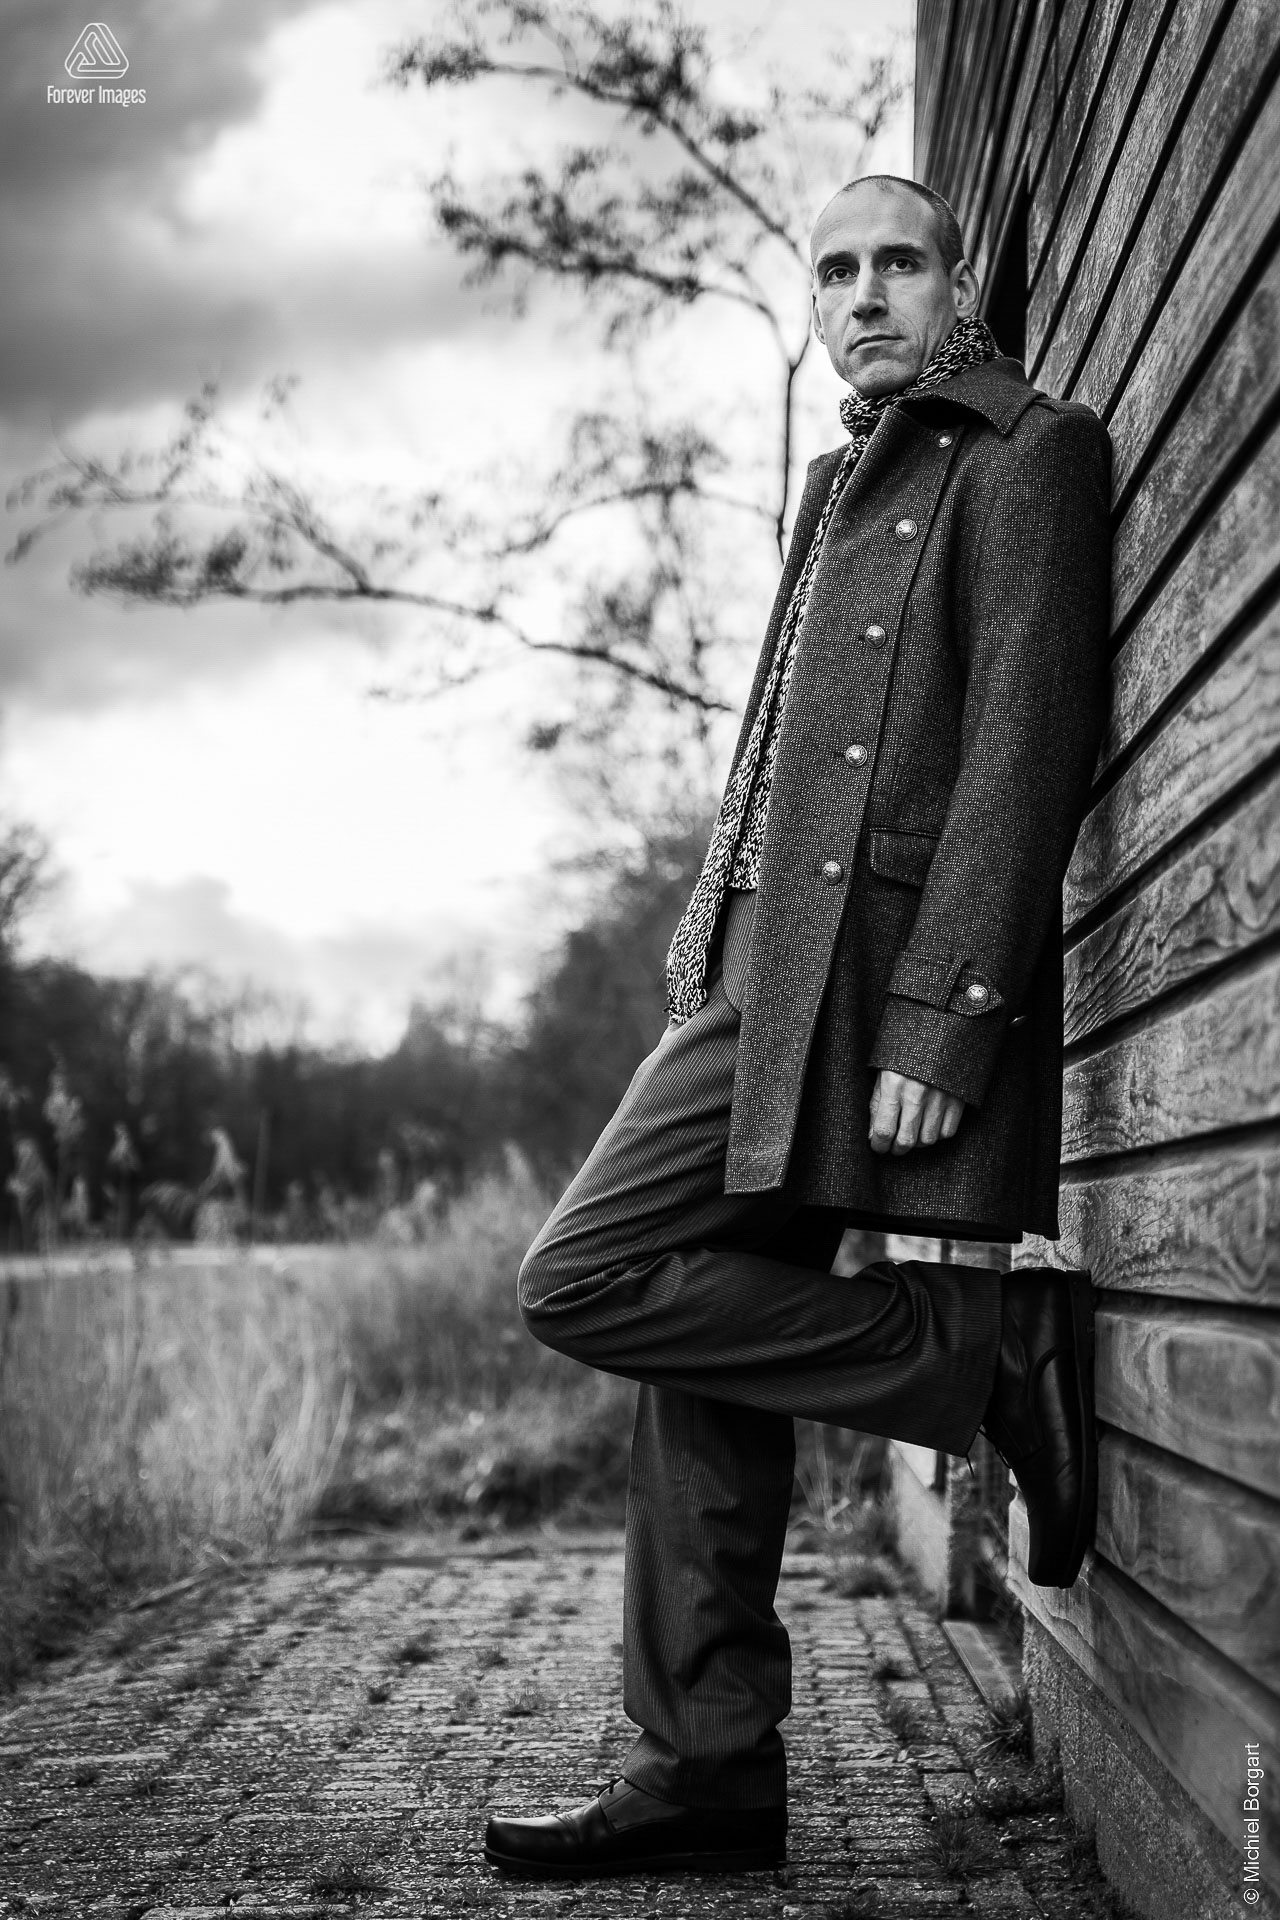 Portrait photo black and white B&W man with winter coat scarf wooden building | Robin Het Twiske De Stootersplas | Portrait Photographer Michiel Borgart - Forever Images.